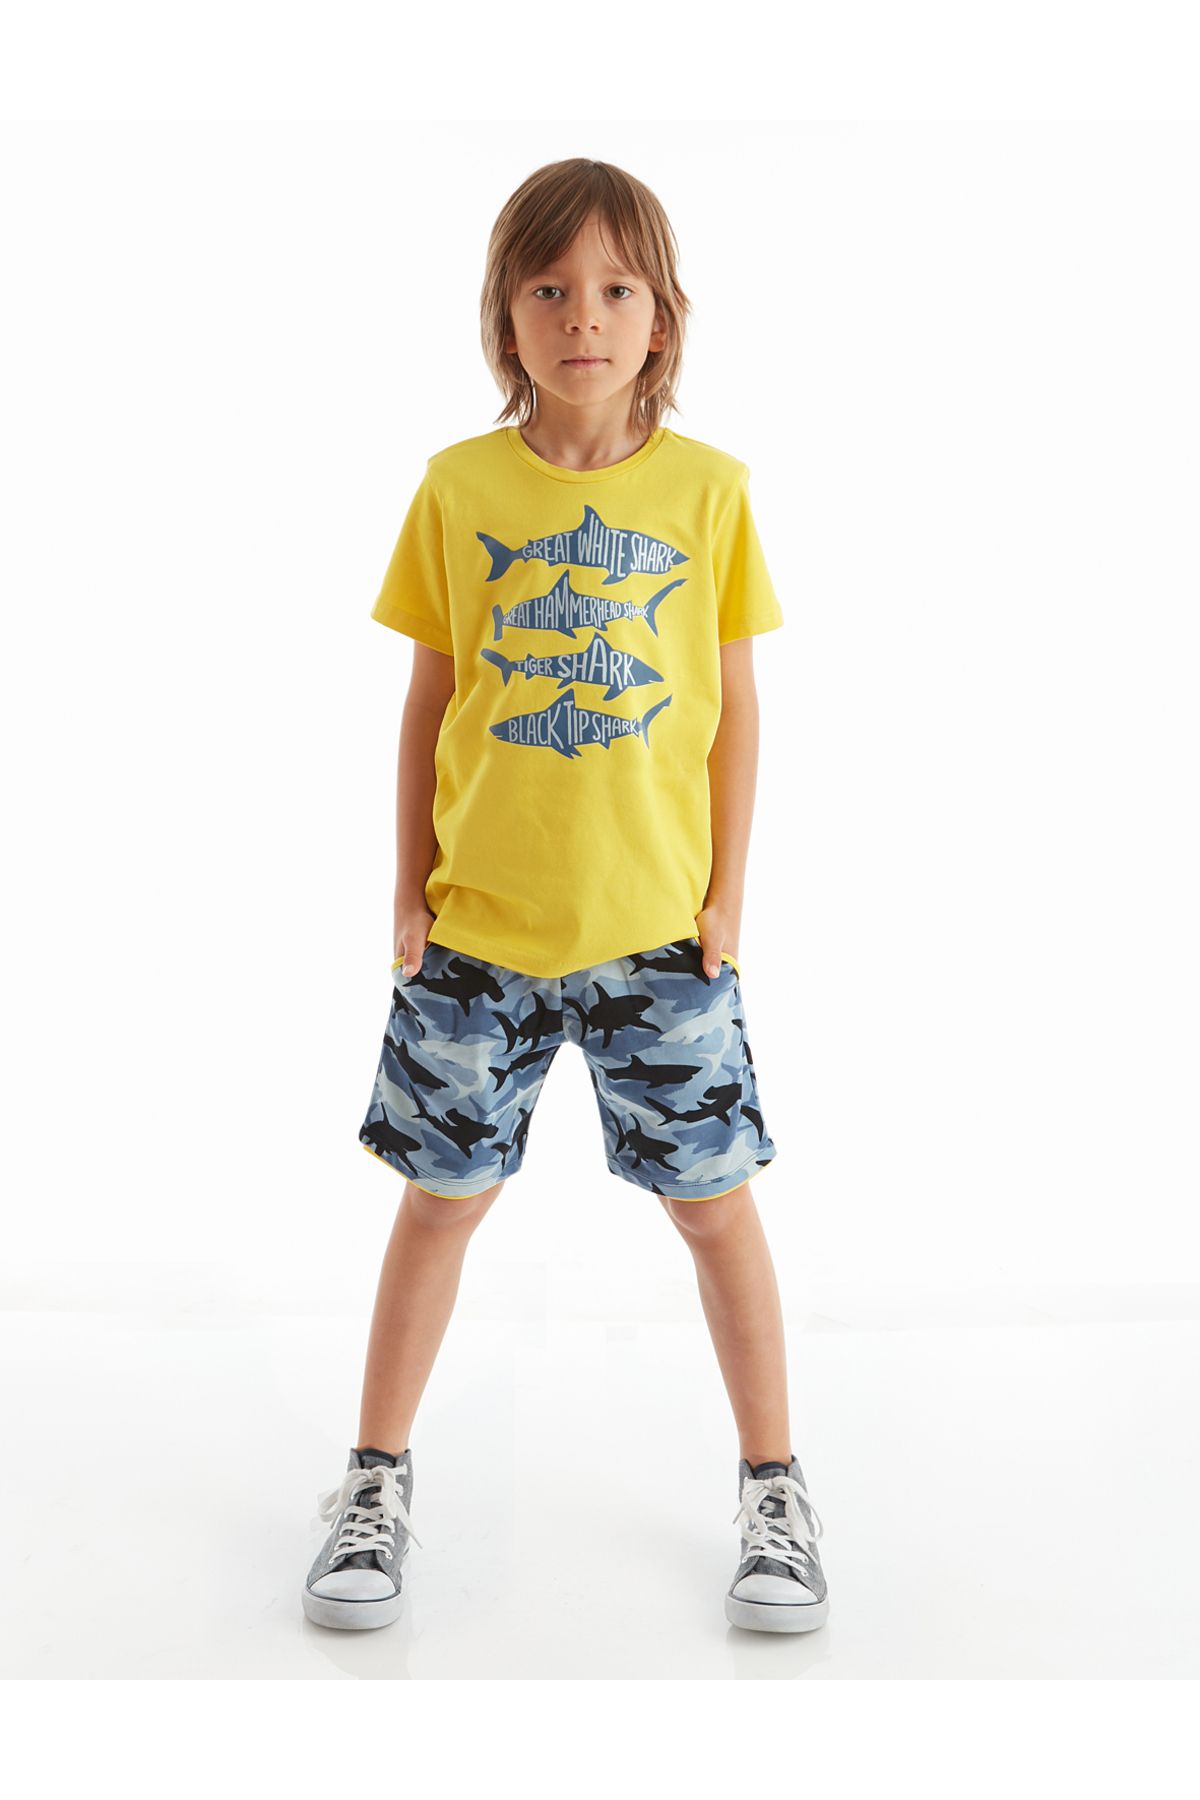 MSHB&G Sharks Erkek Çocuk T-shirt Şort Takım